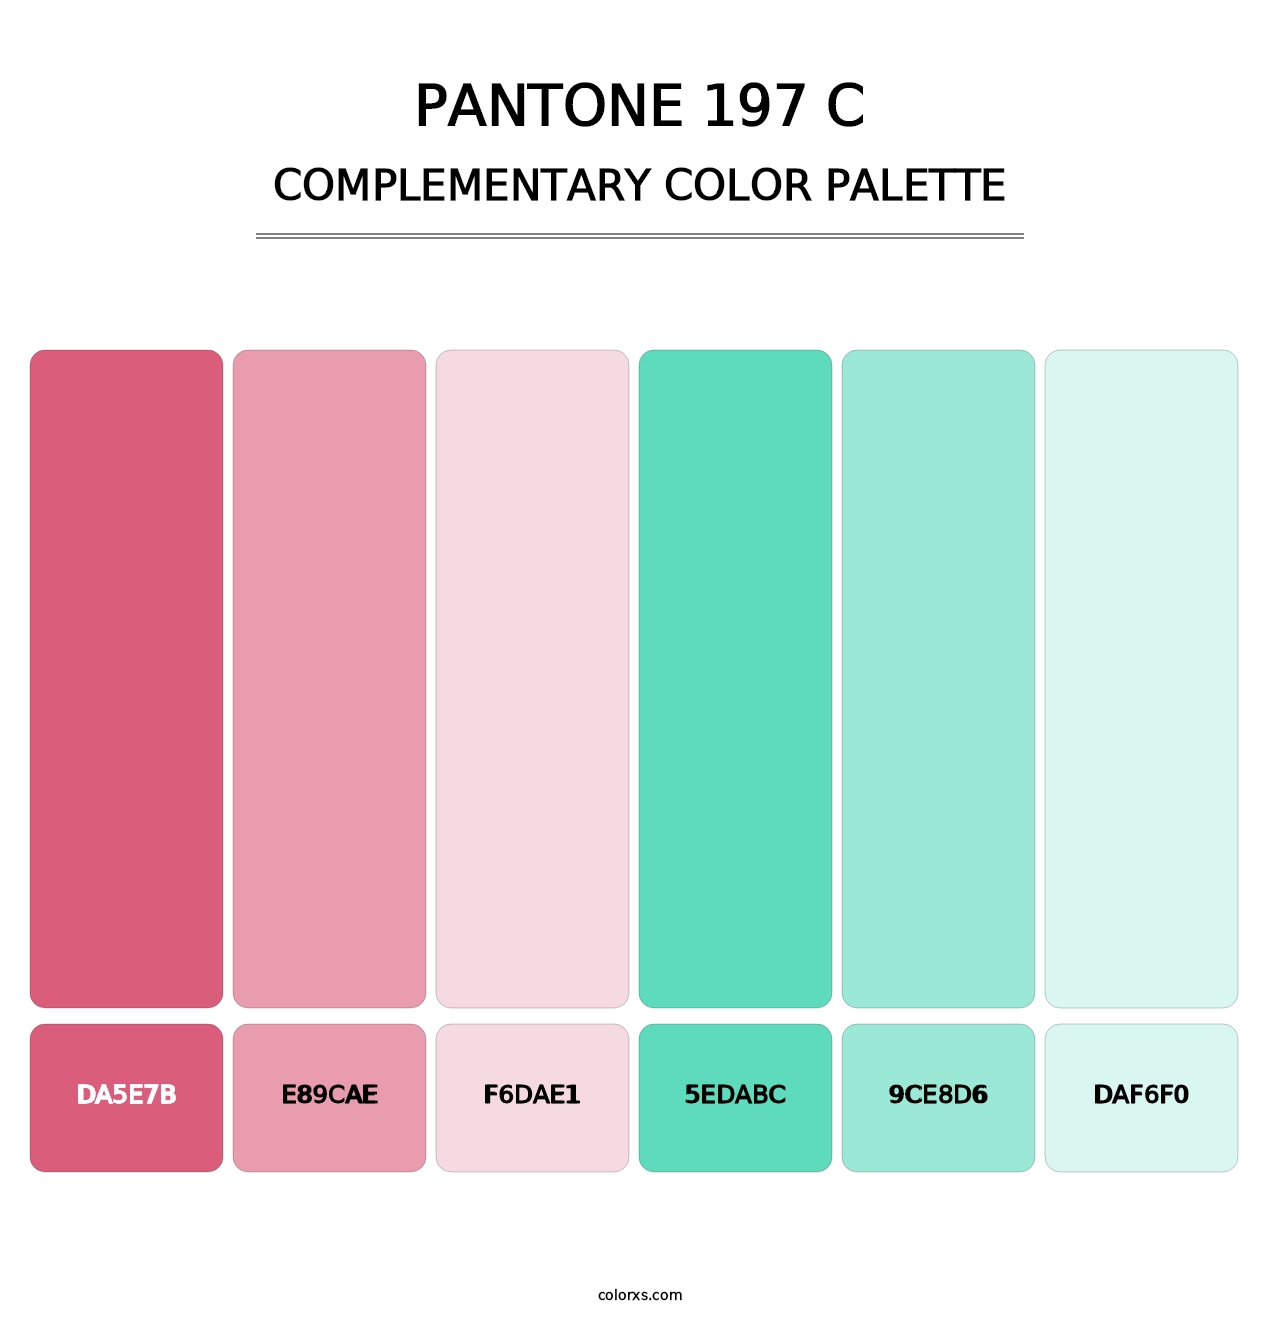 PANTONE 197 C - Complementary Color Palette